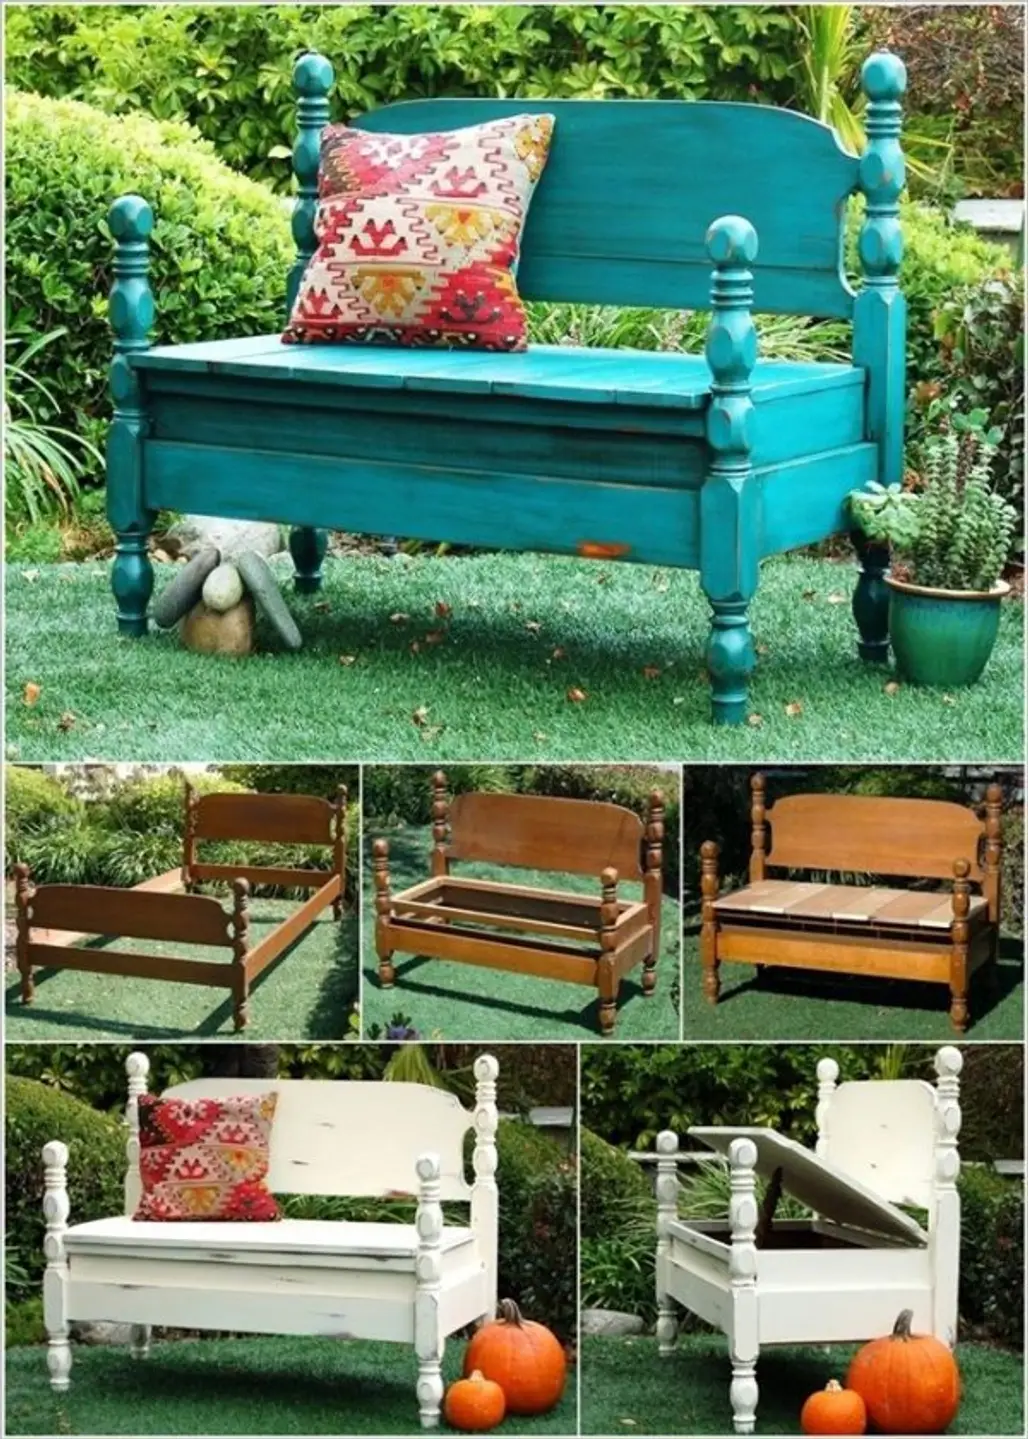 furniture,product,garden,backyard,lawn,